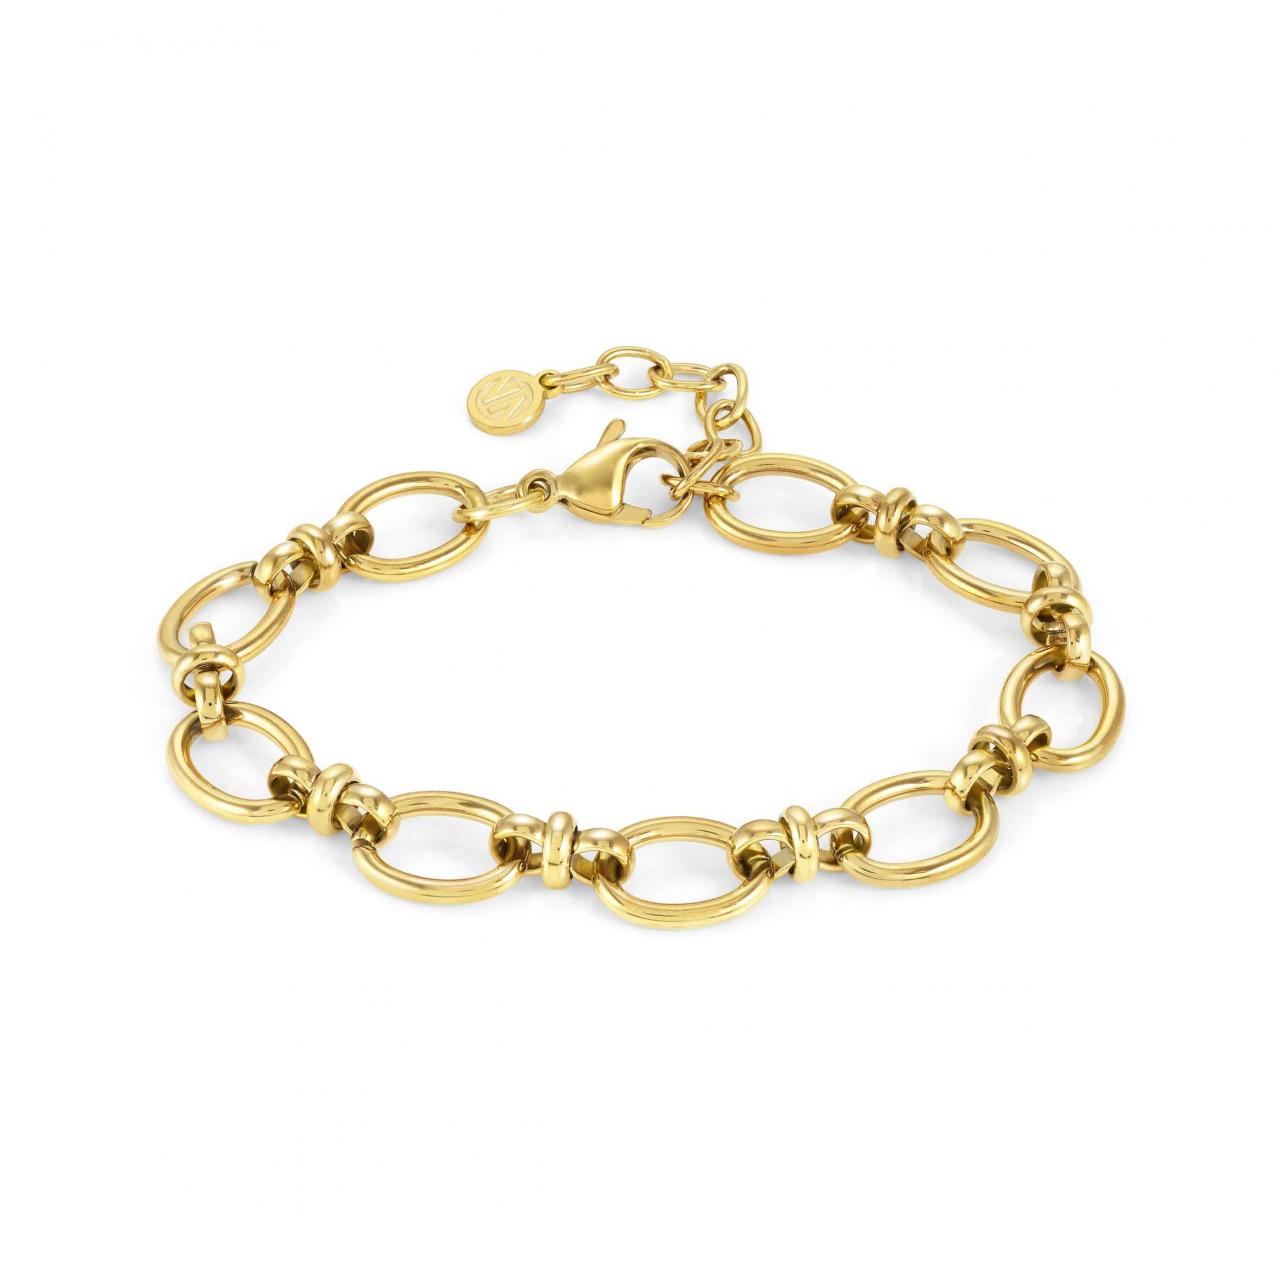 Affinity gold steel chain bracelet